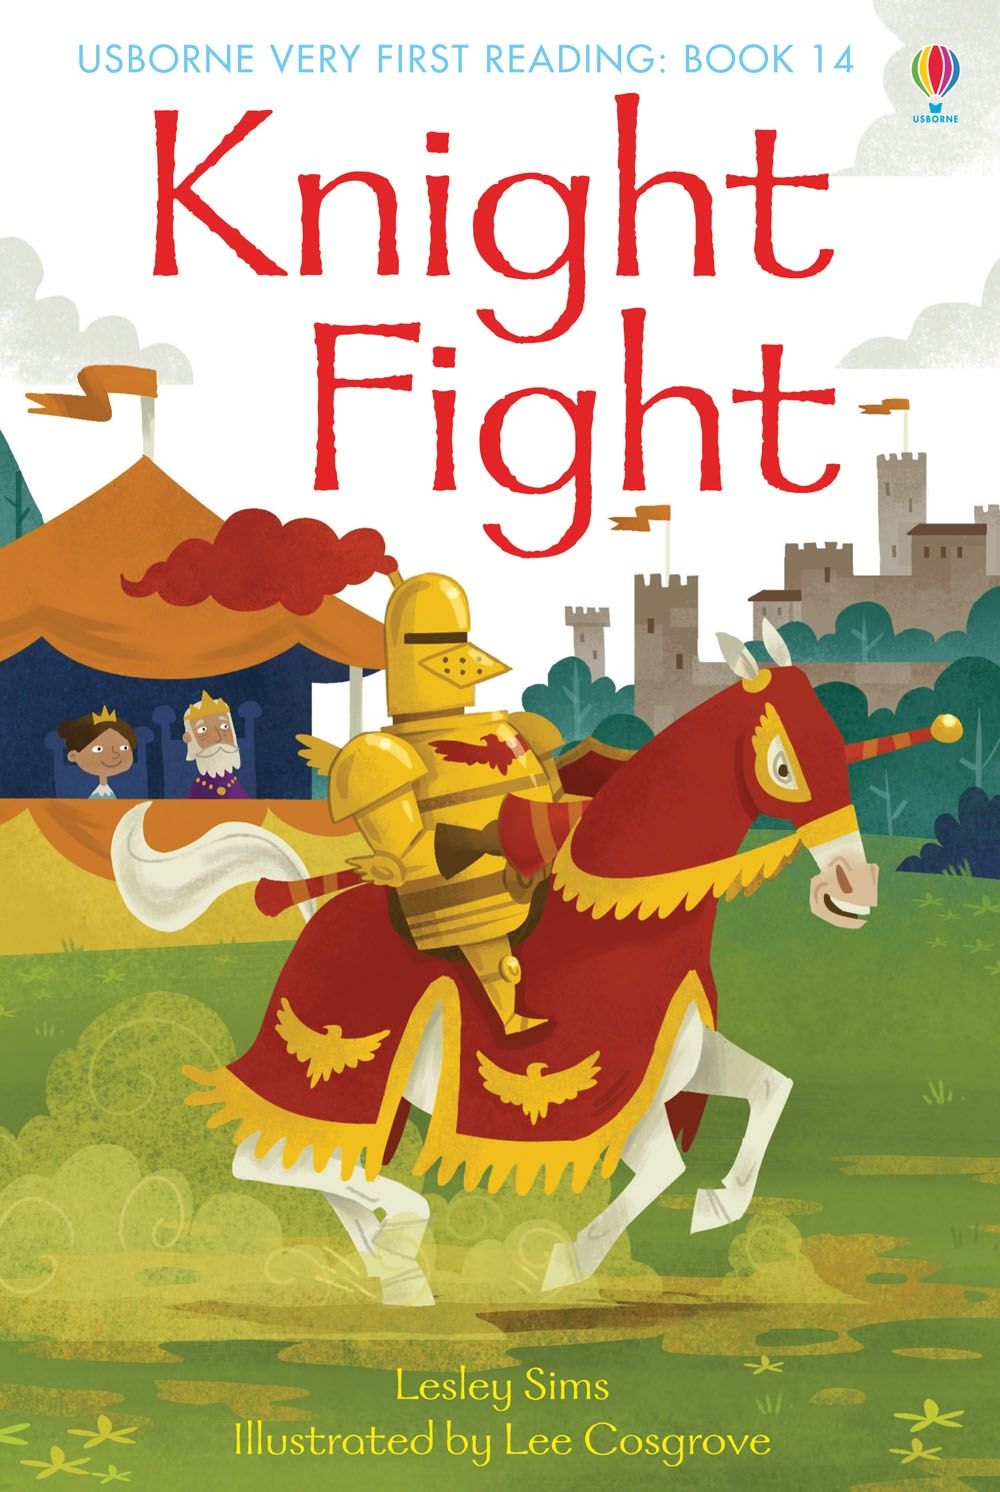 14. Knight Fight